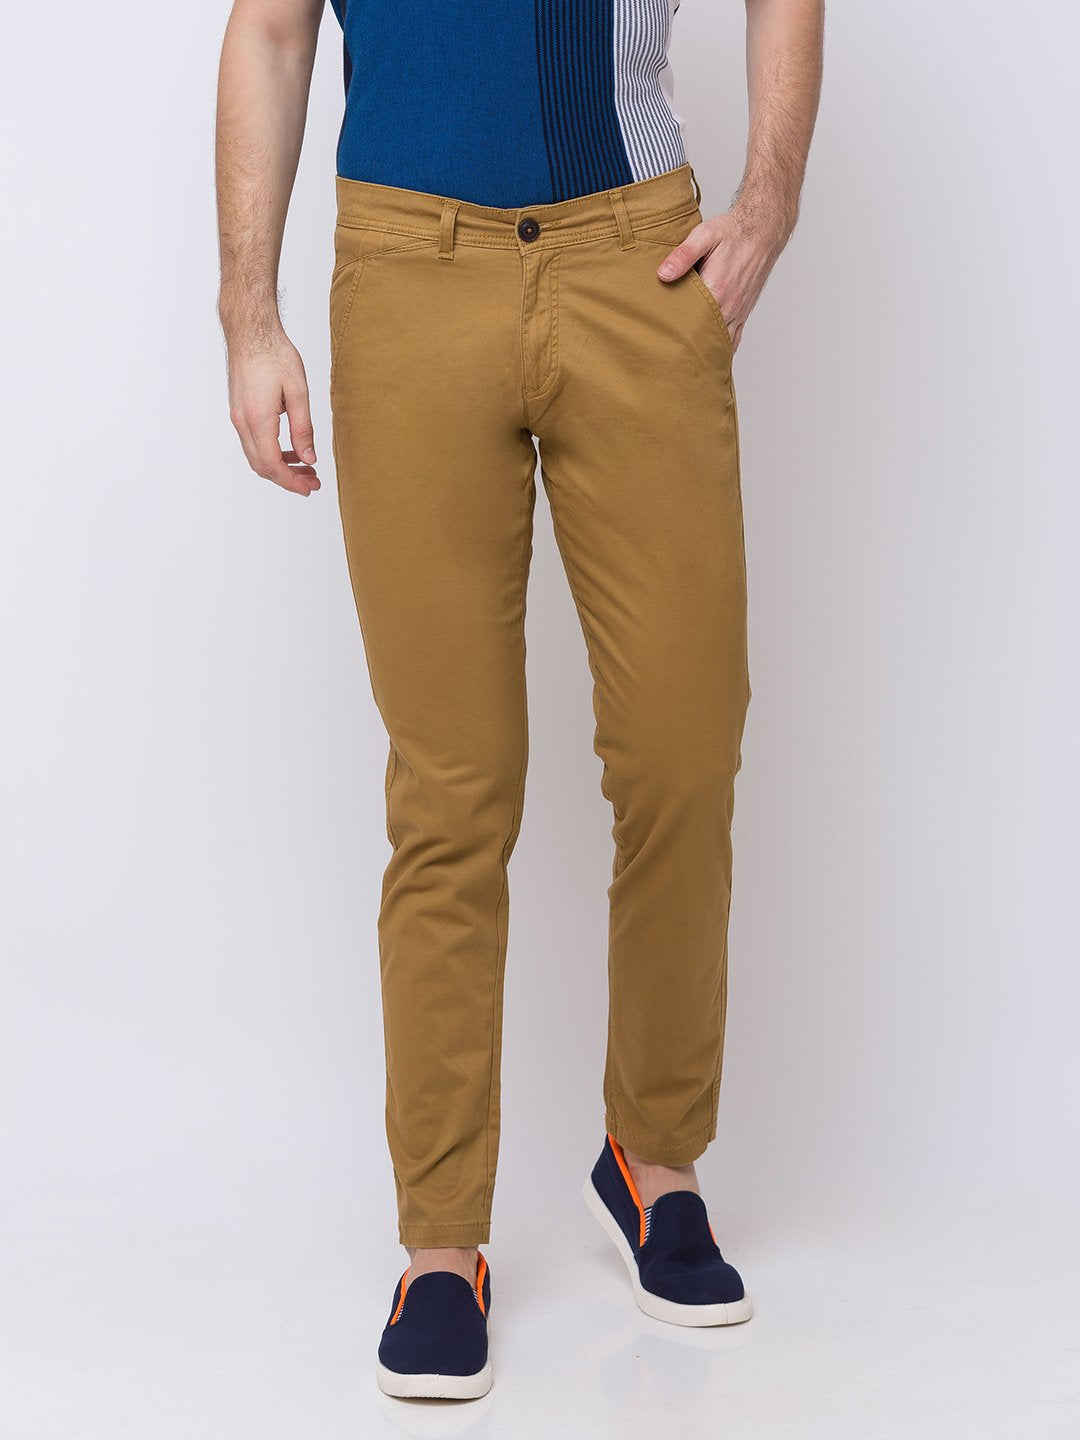 Status Quo |Khaki Solid Open Bottom Trousers - M, L, XL, XXL